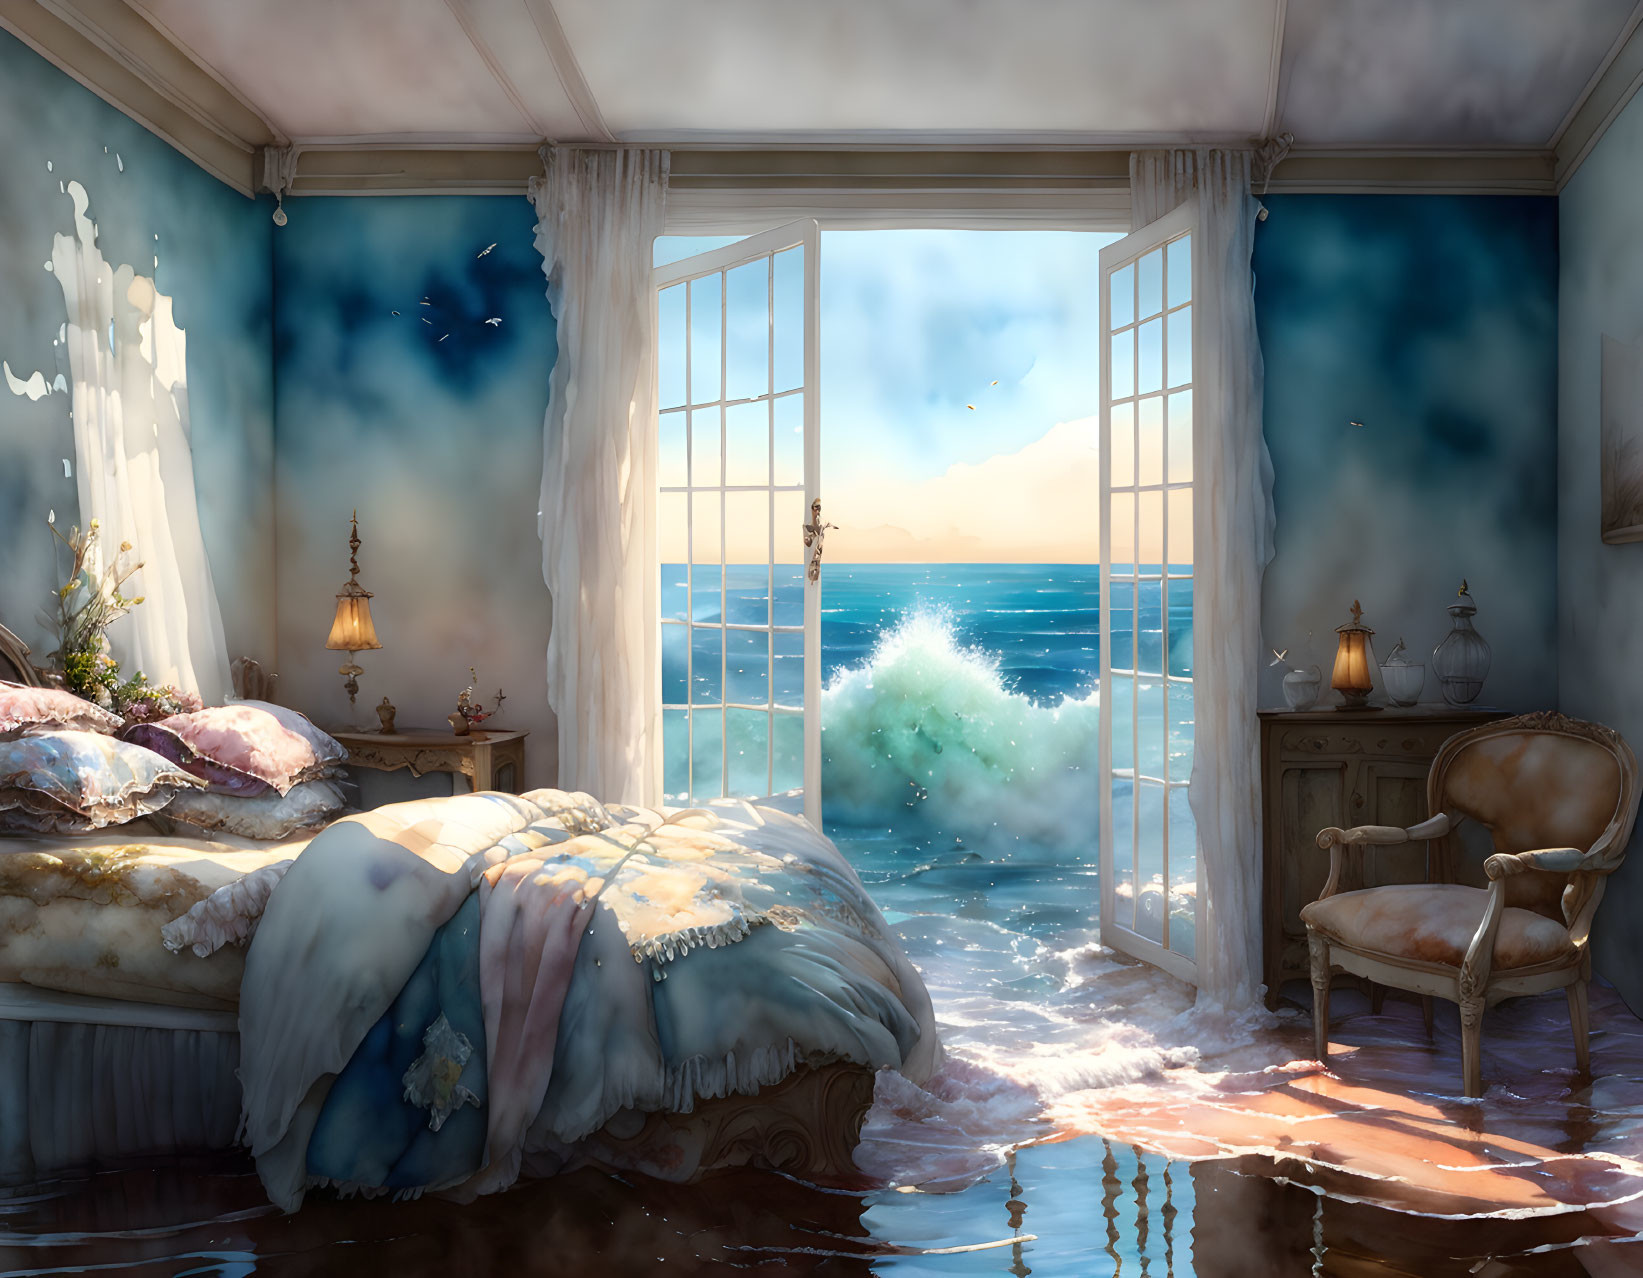 Bed vs Ocean